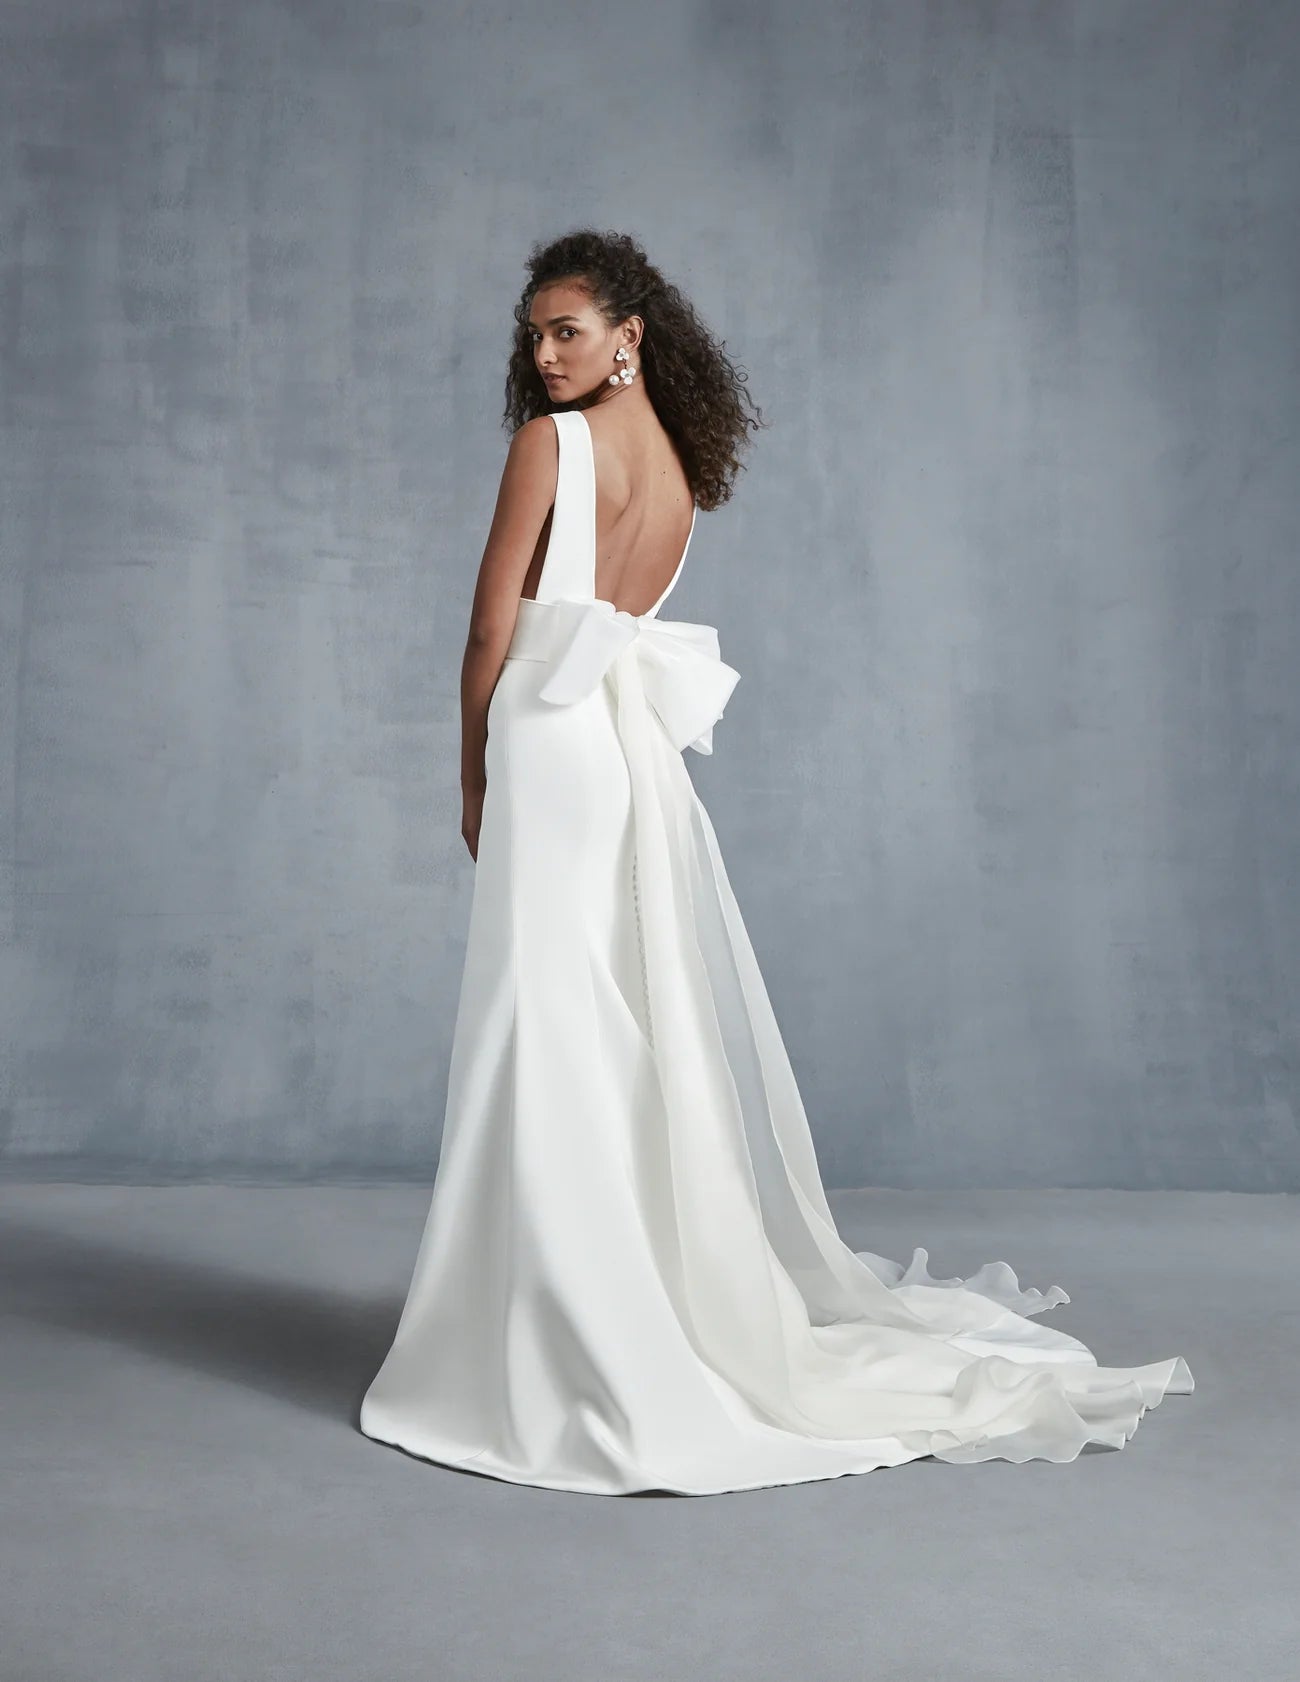 GC#37380 Ines di Santo Heart Wedding Dress in Size 6 (MP)